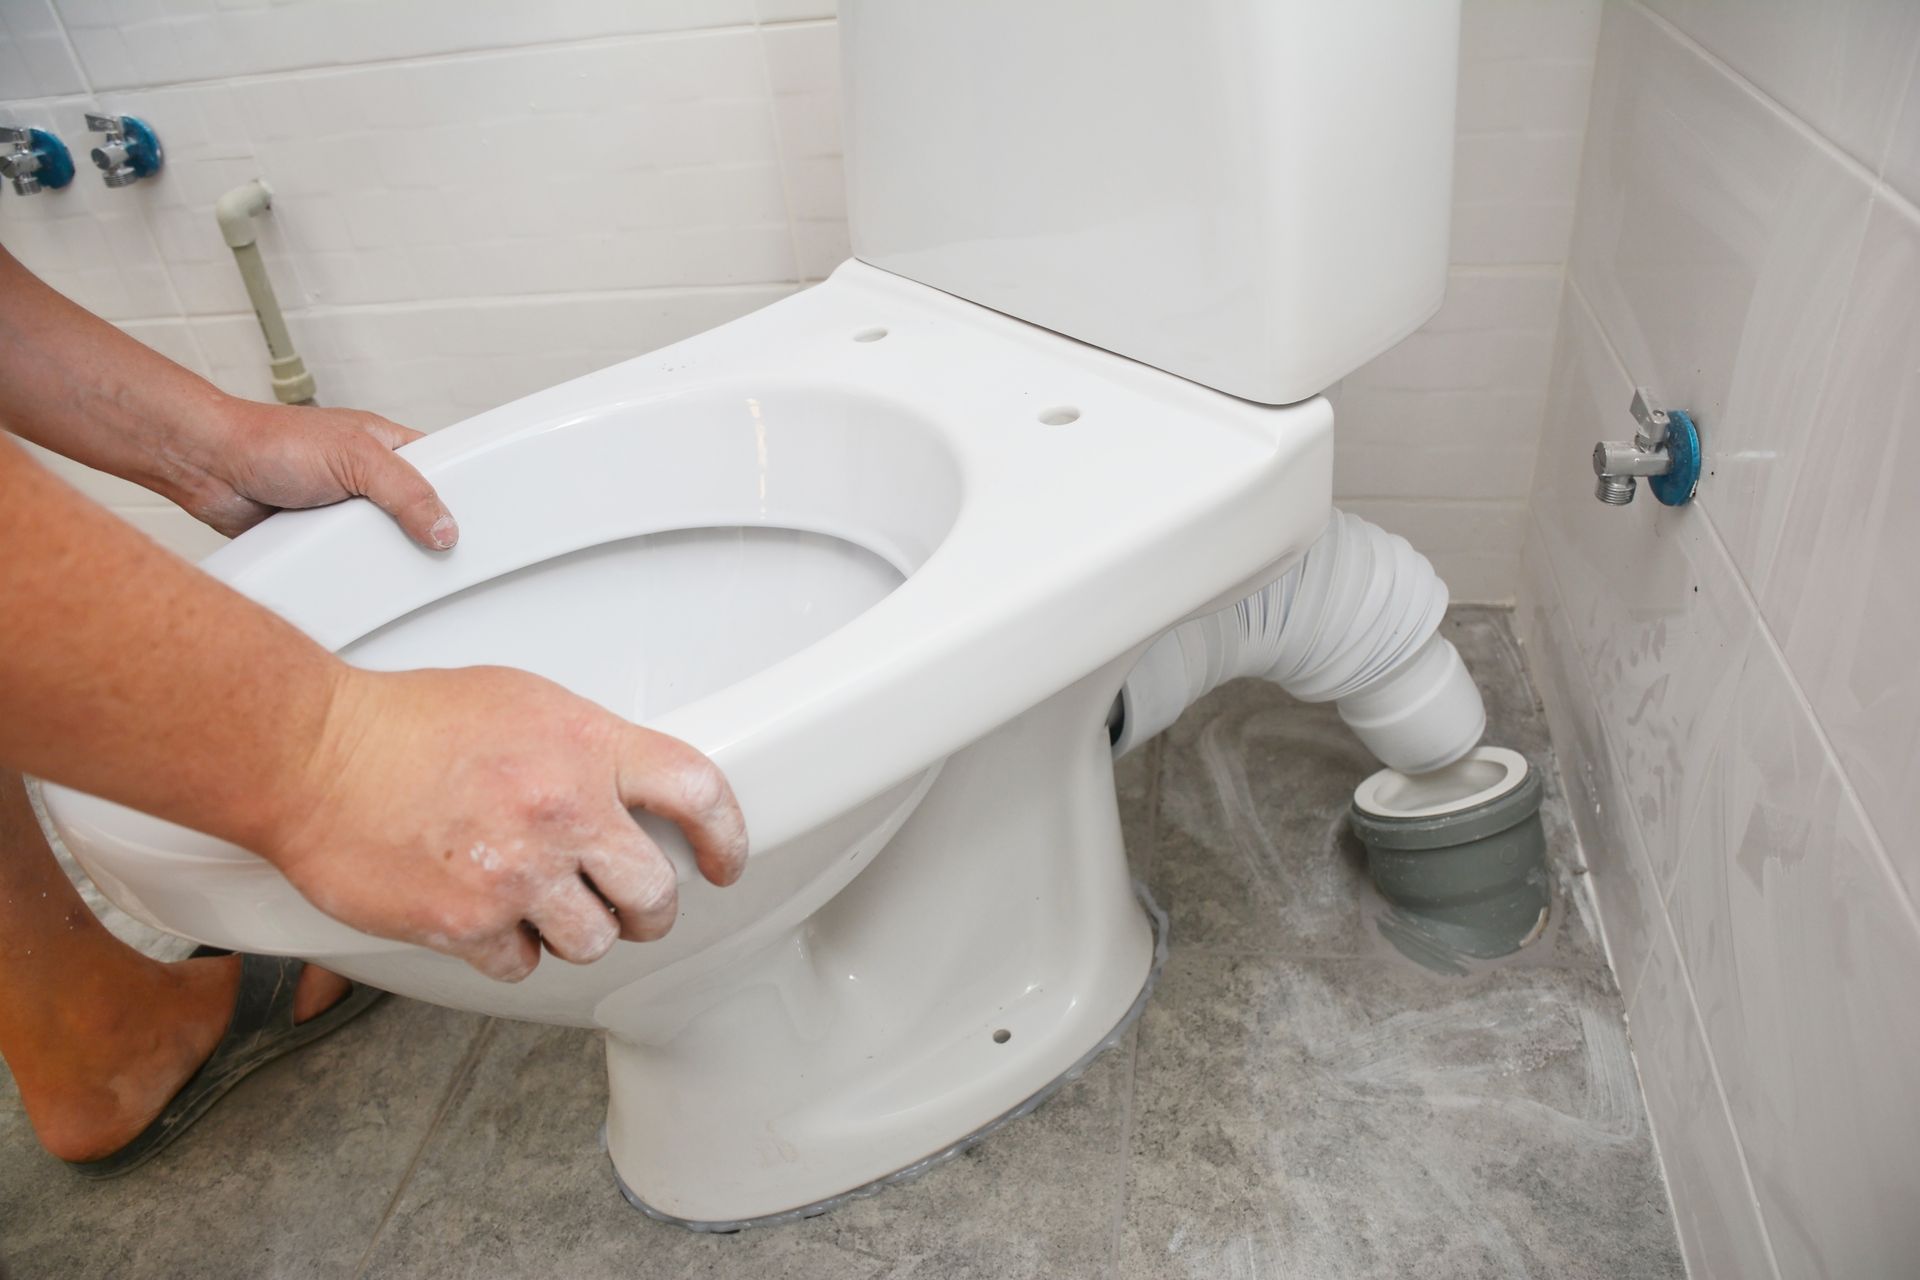 A handyman hands skillfully installing a flush toilet bowl in a bathroom.